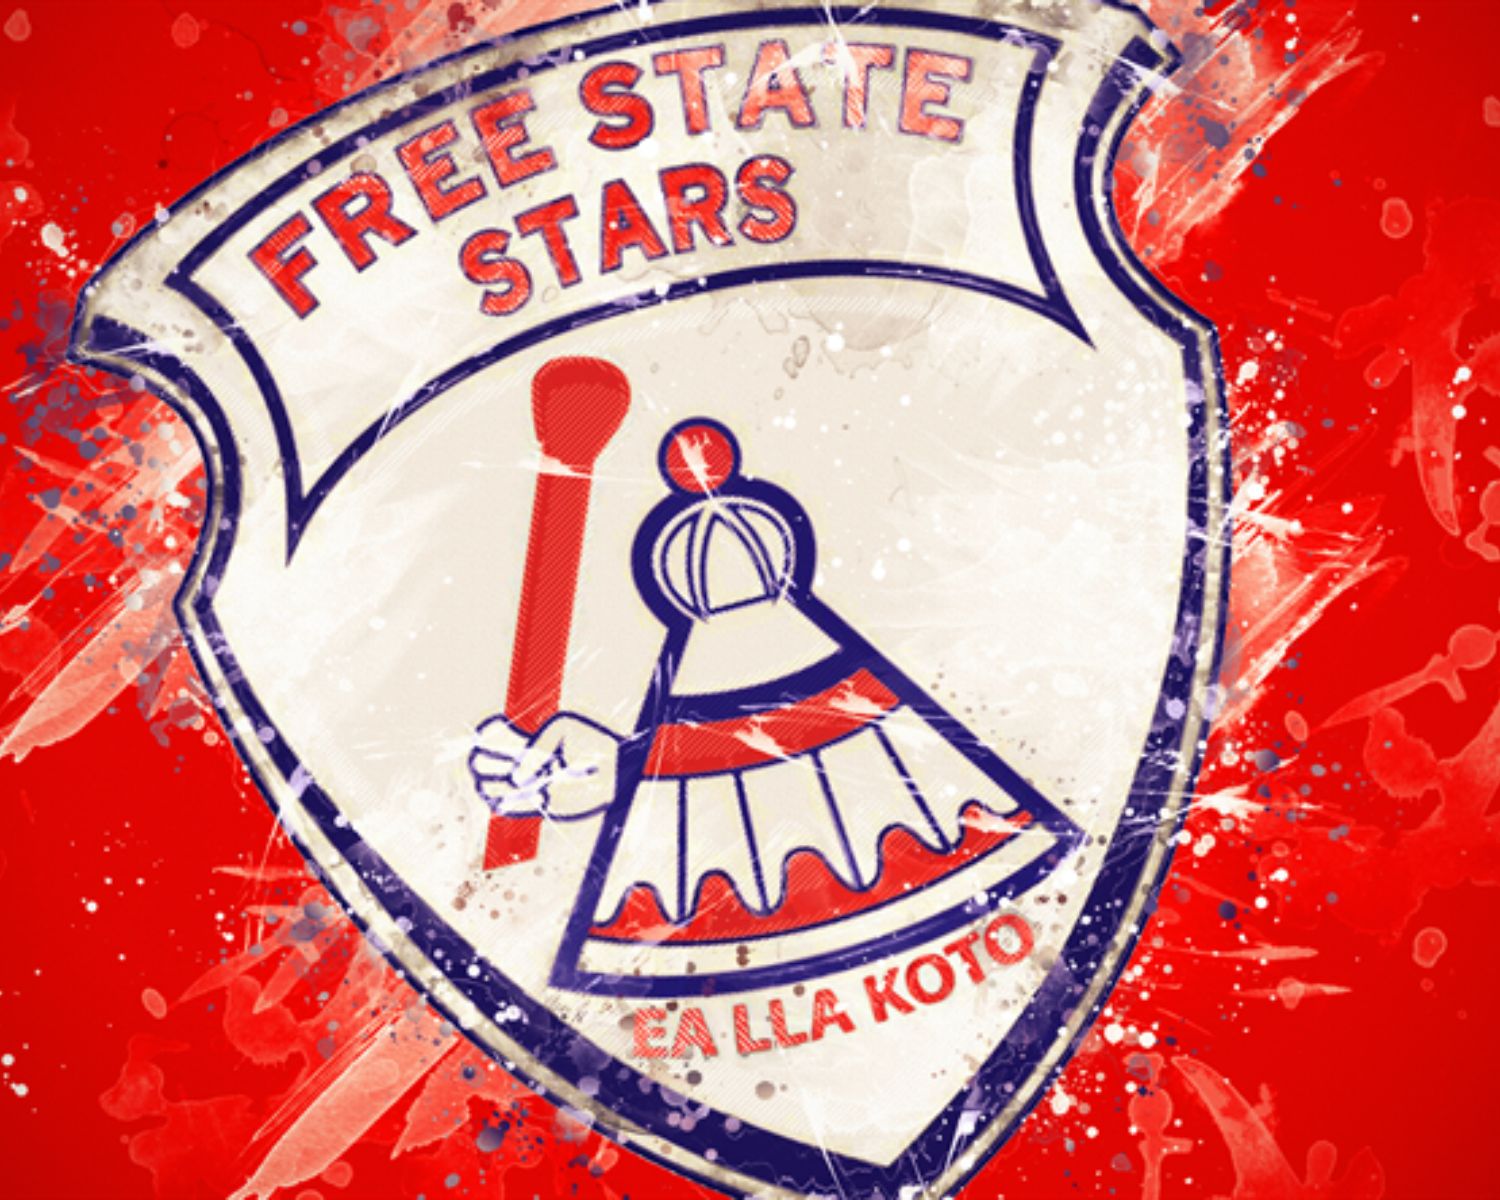 free-state-stars-fc-11-football-club-facts